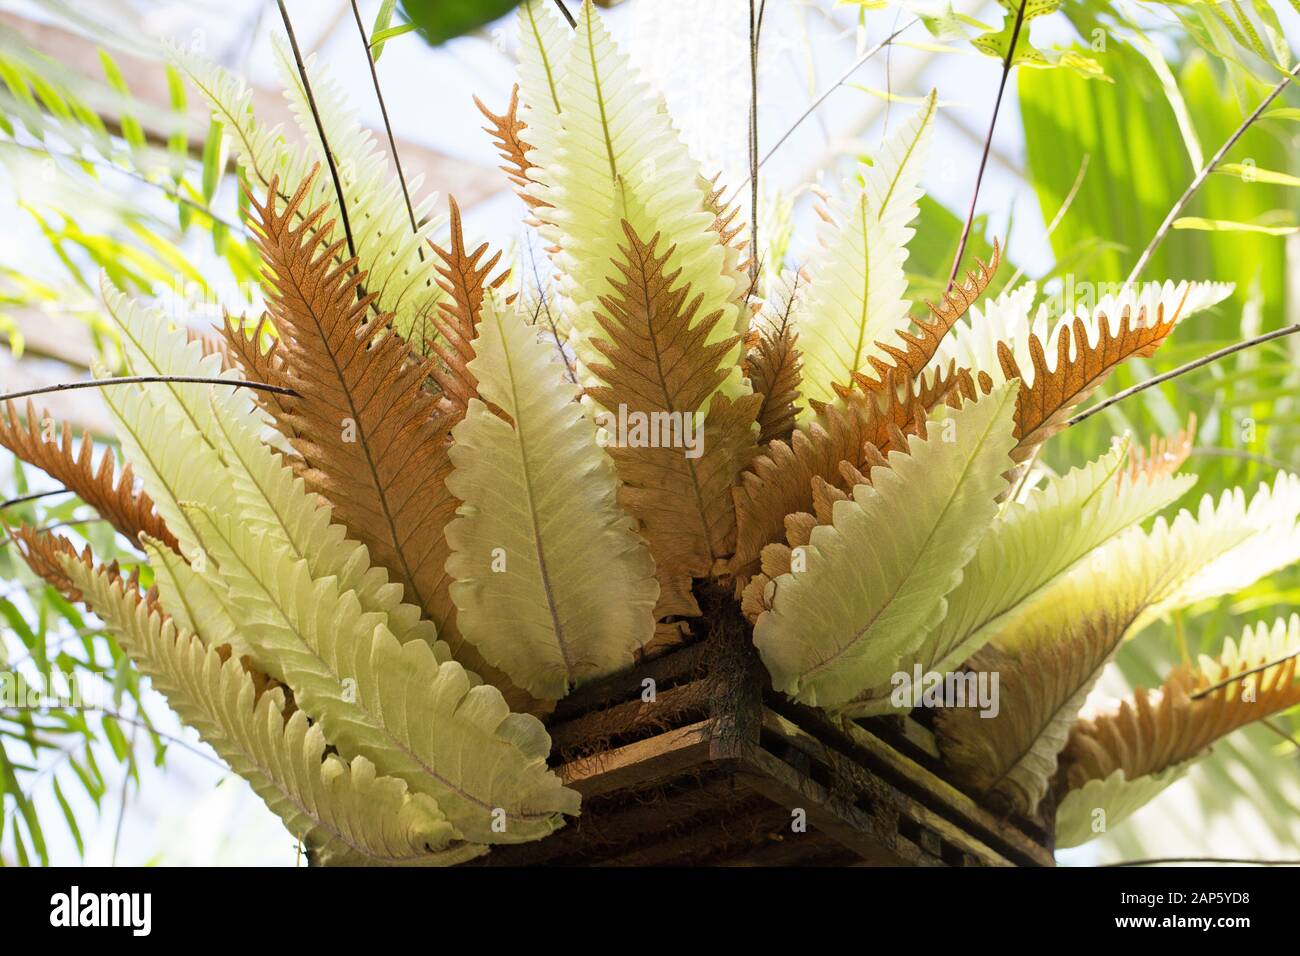 Drynaria rigidula fern in a hanging basket. Stock Photo